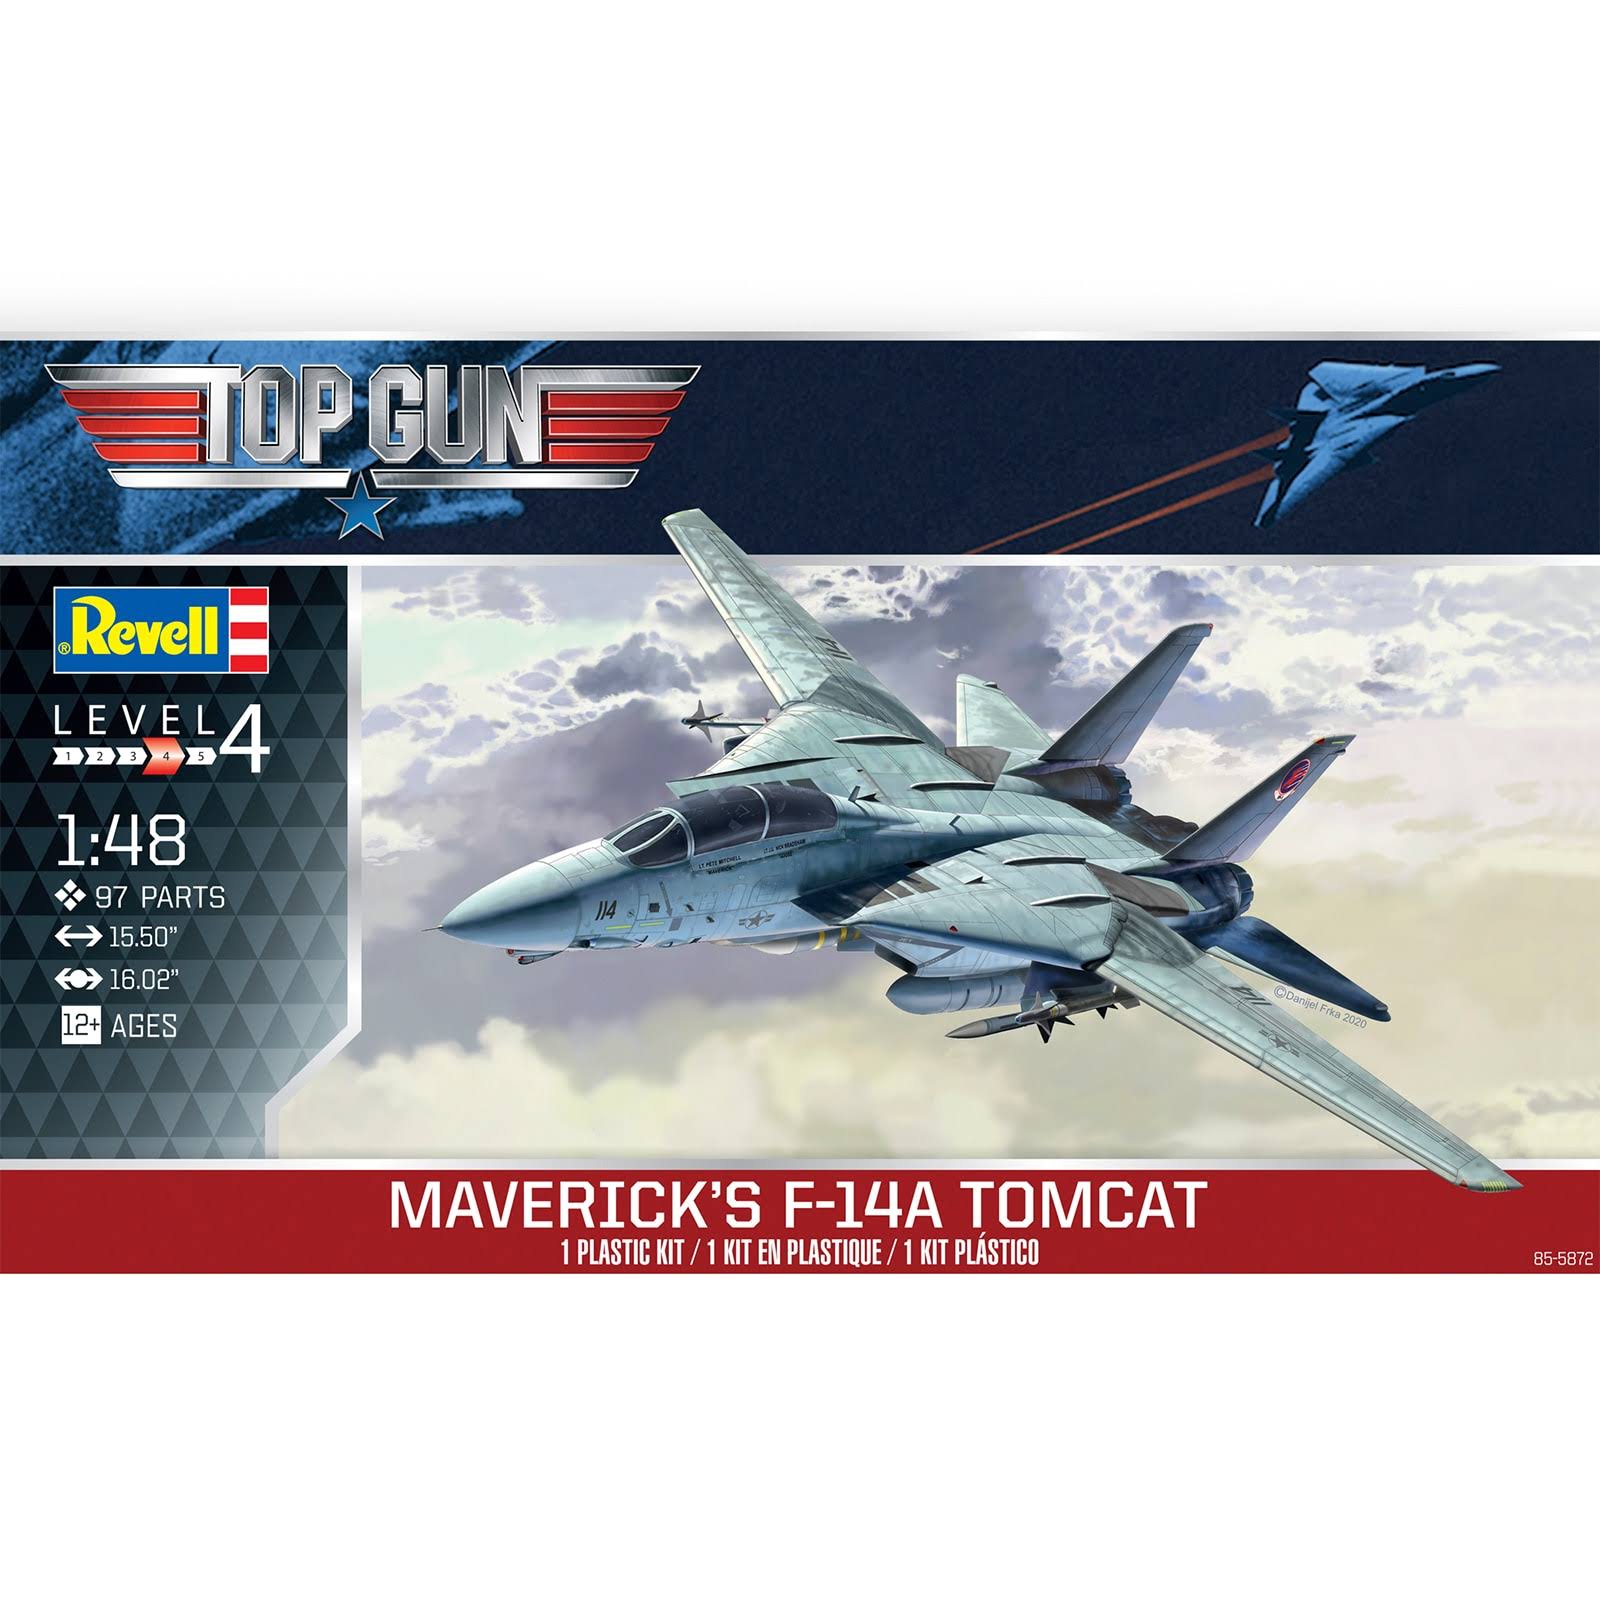 1/48 Top Gun Maverick's F-14A Tomcat